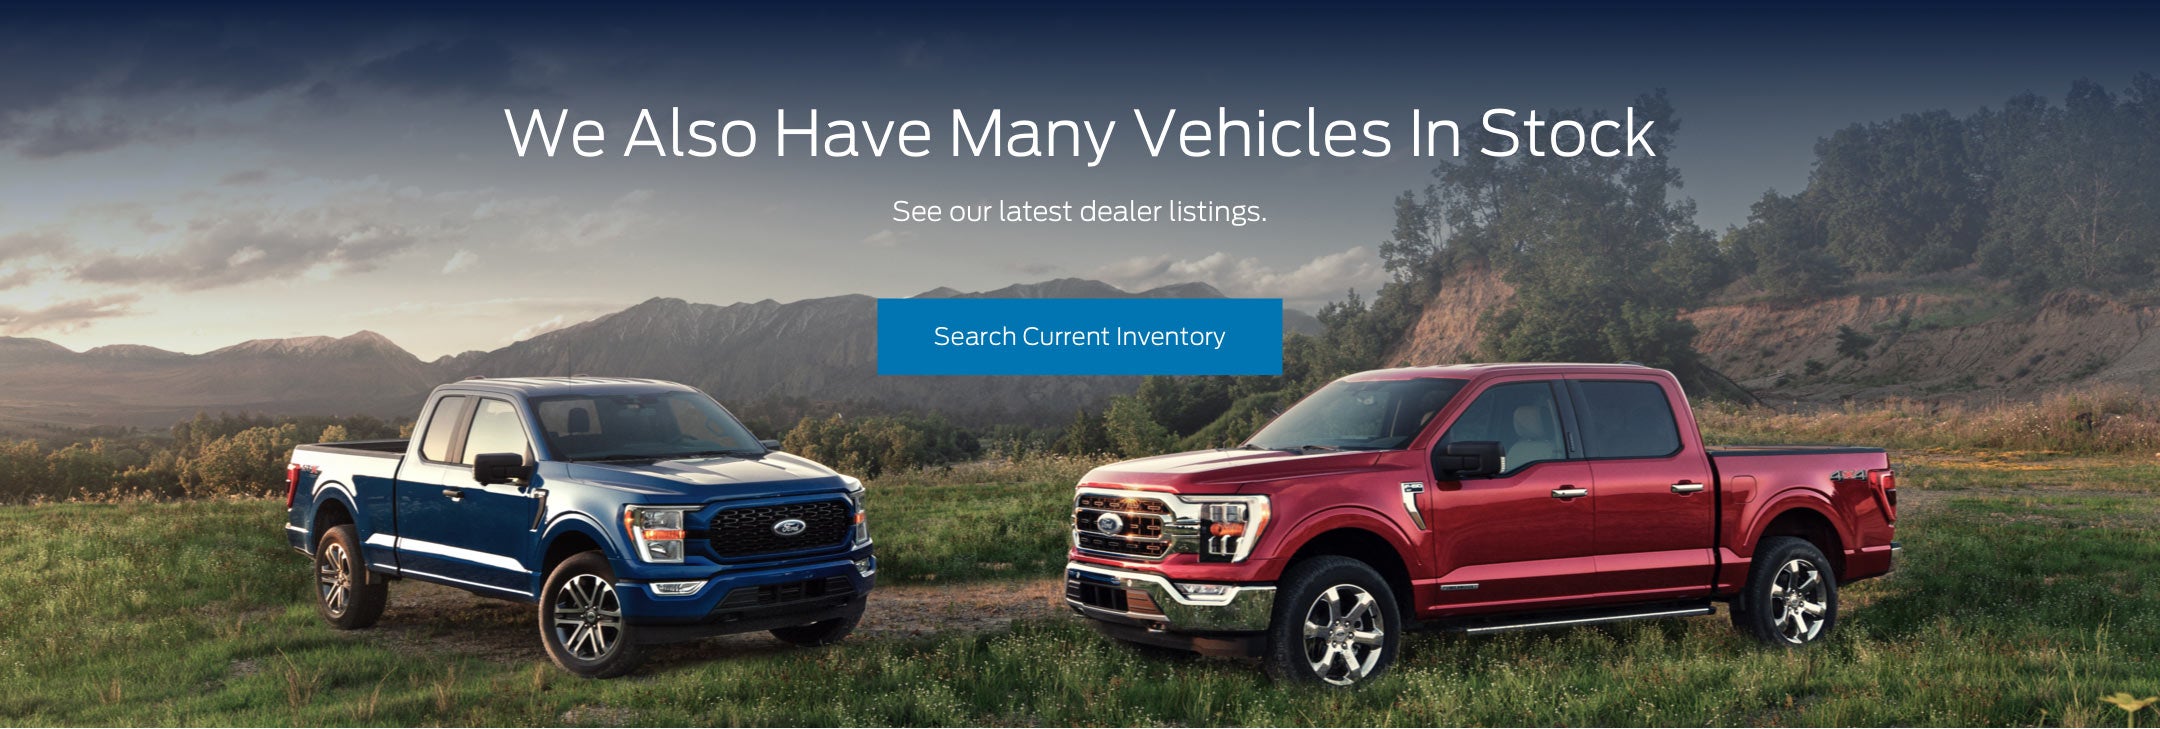 Ford vehicles in stock | Bill Penney Ford in Jasper AL